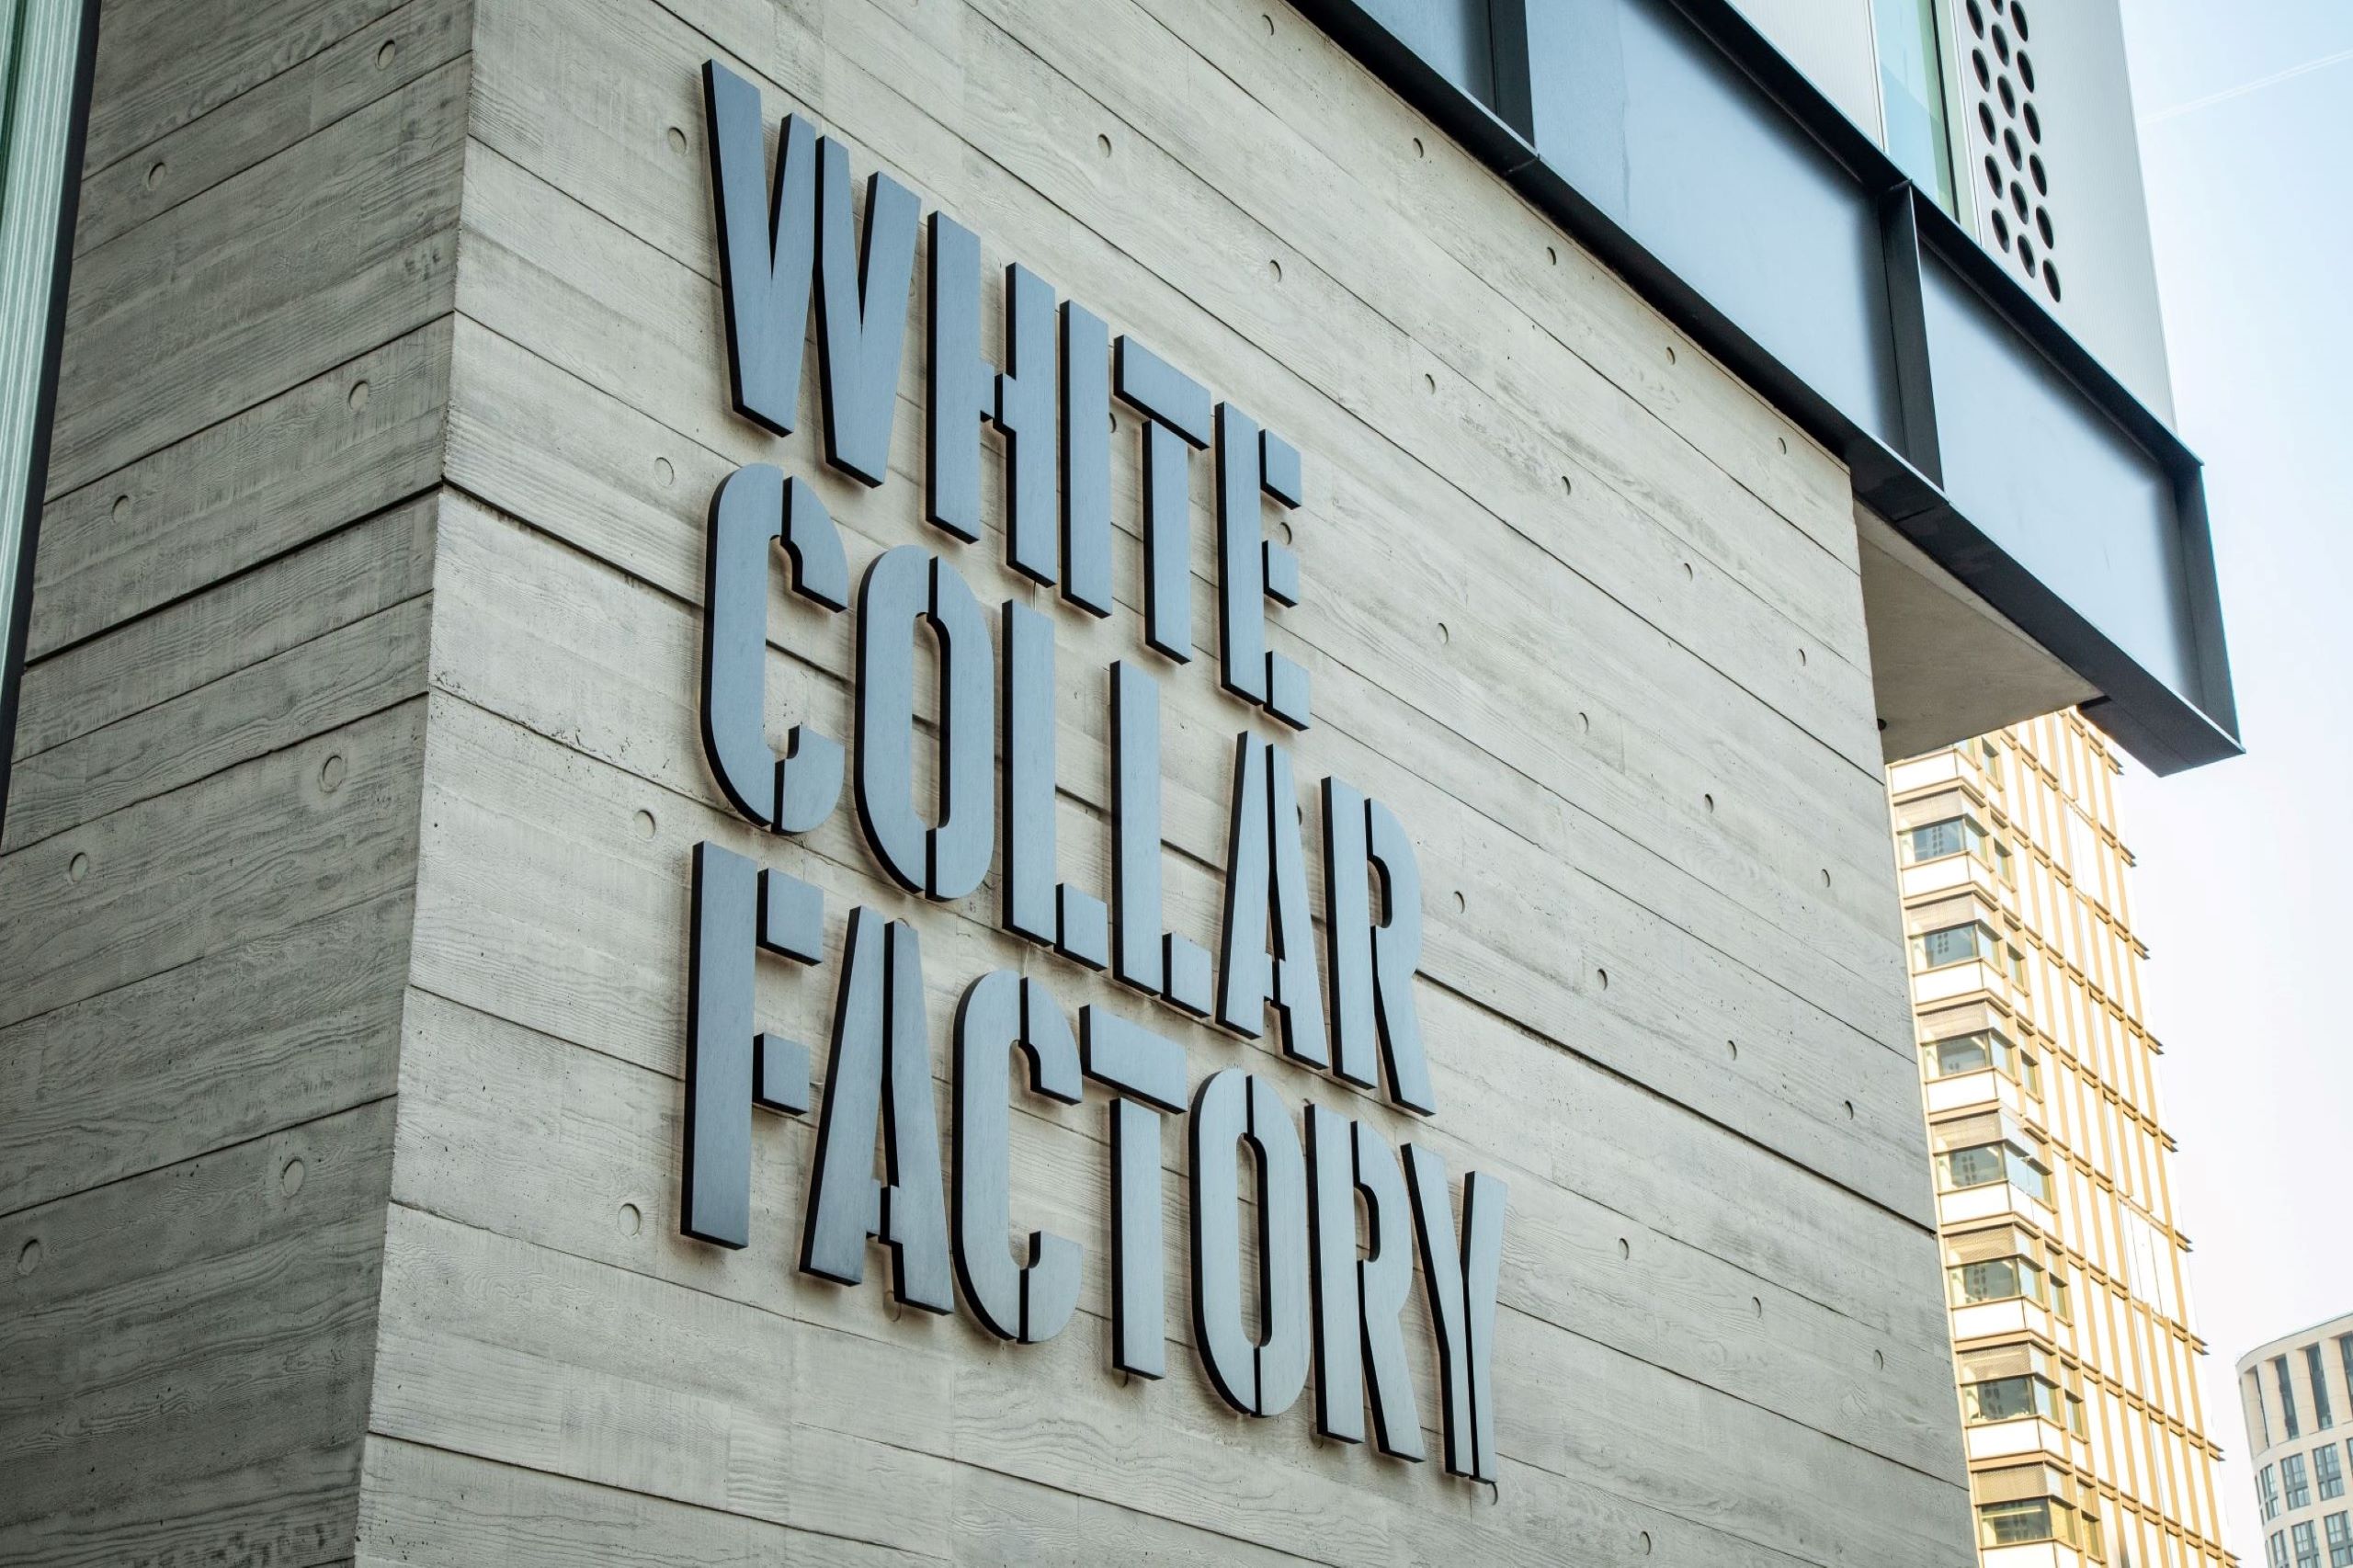 white-collar-factory-header